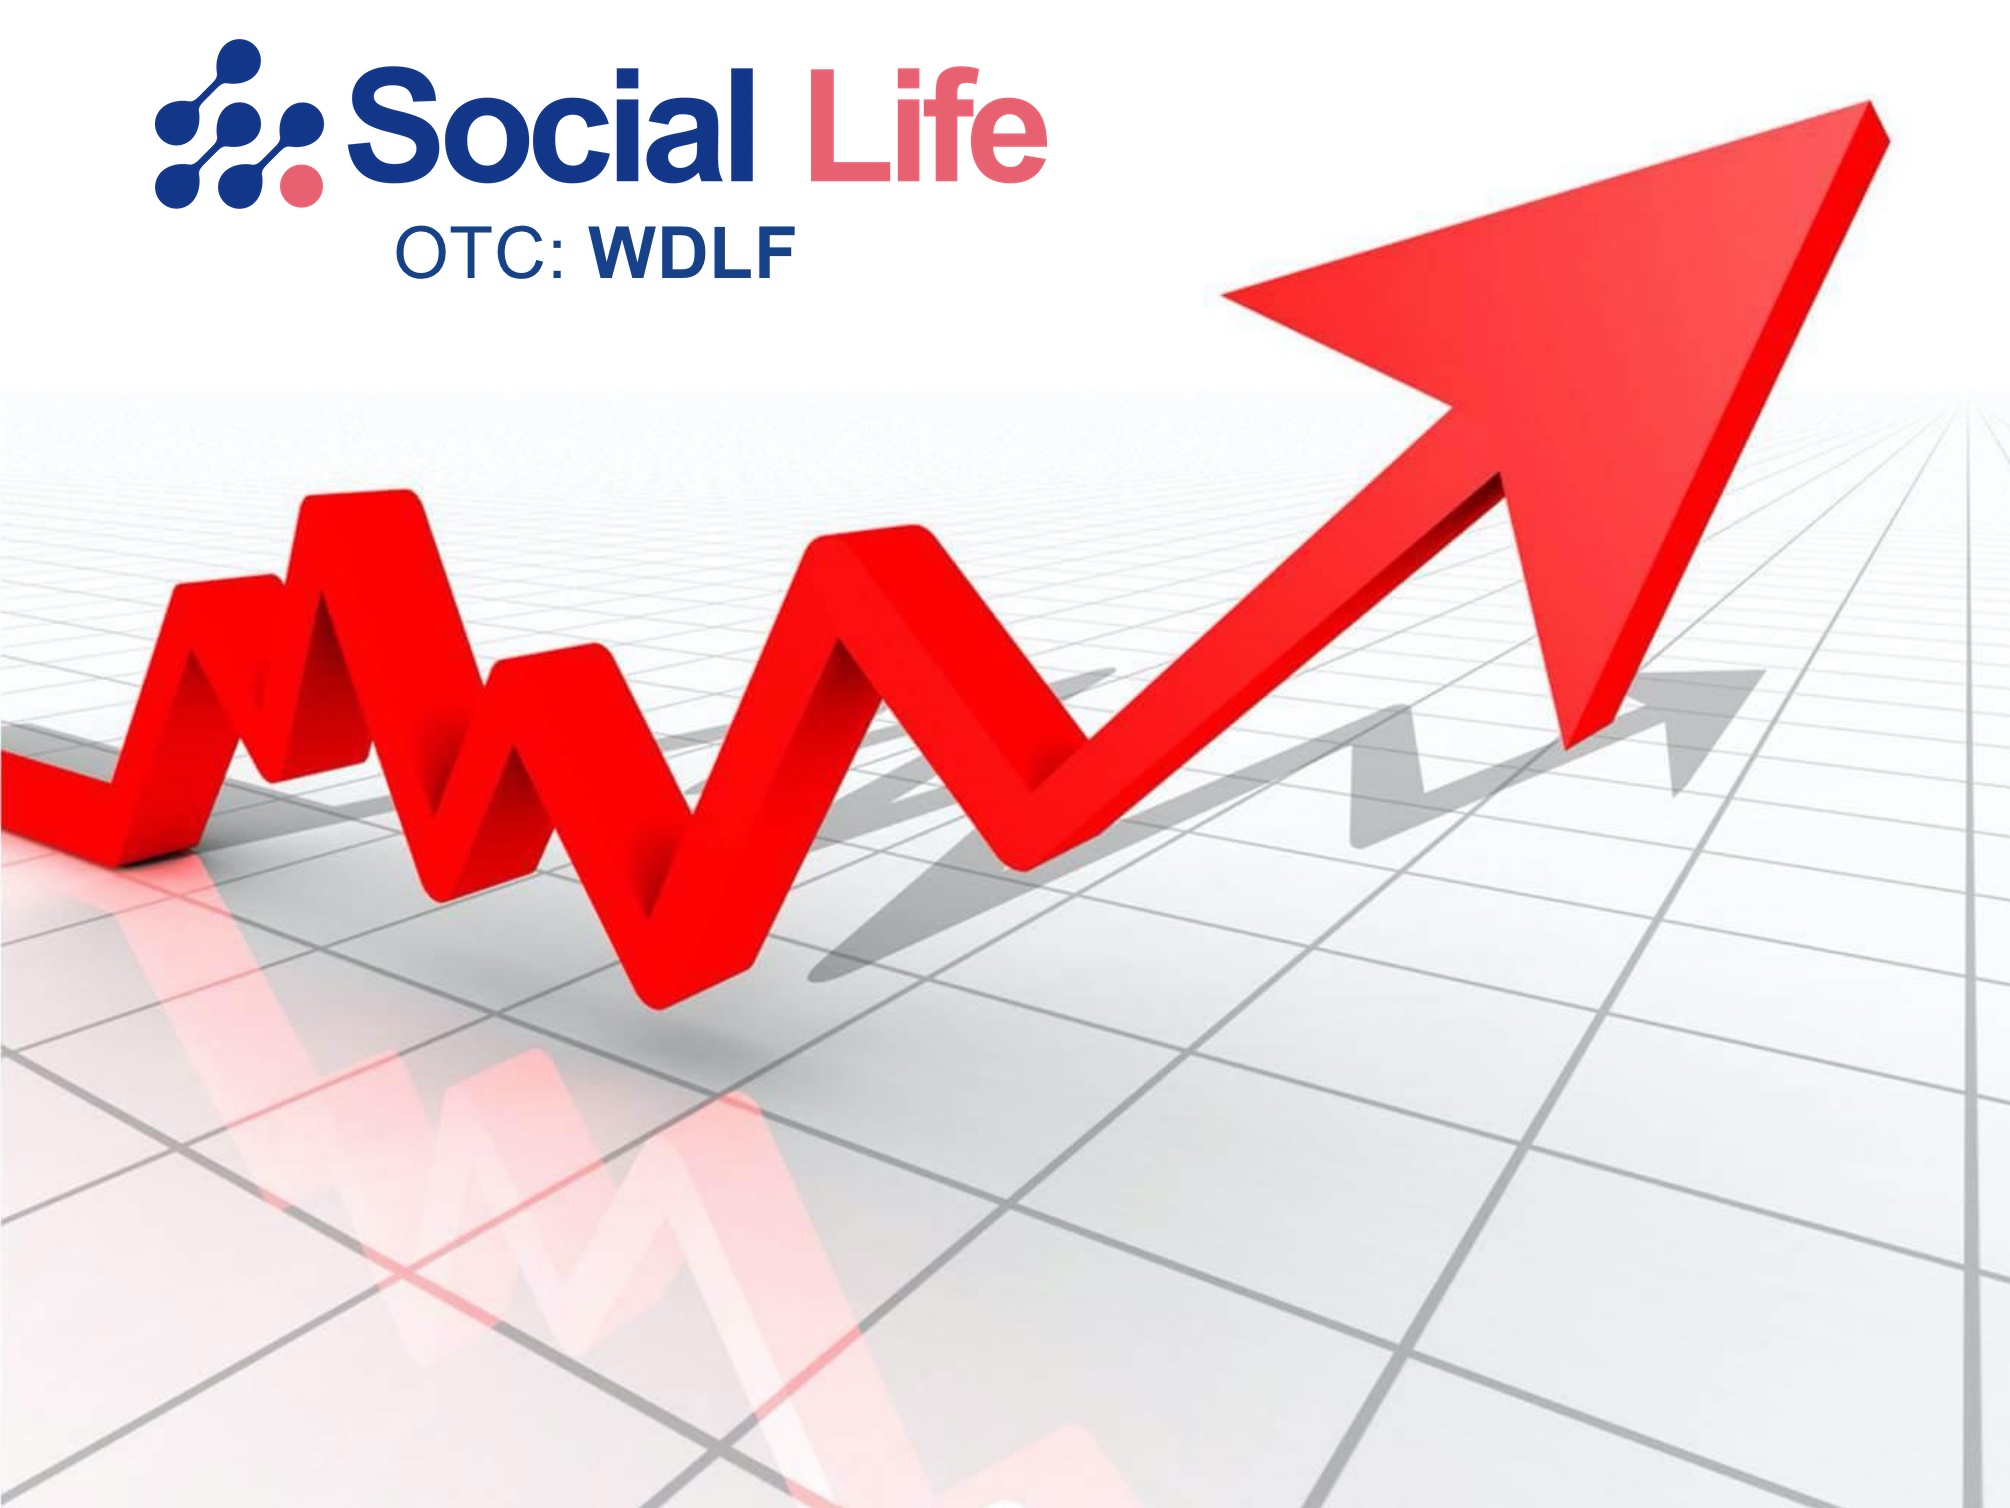 Social Life Network - OTC: WDLF